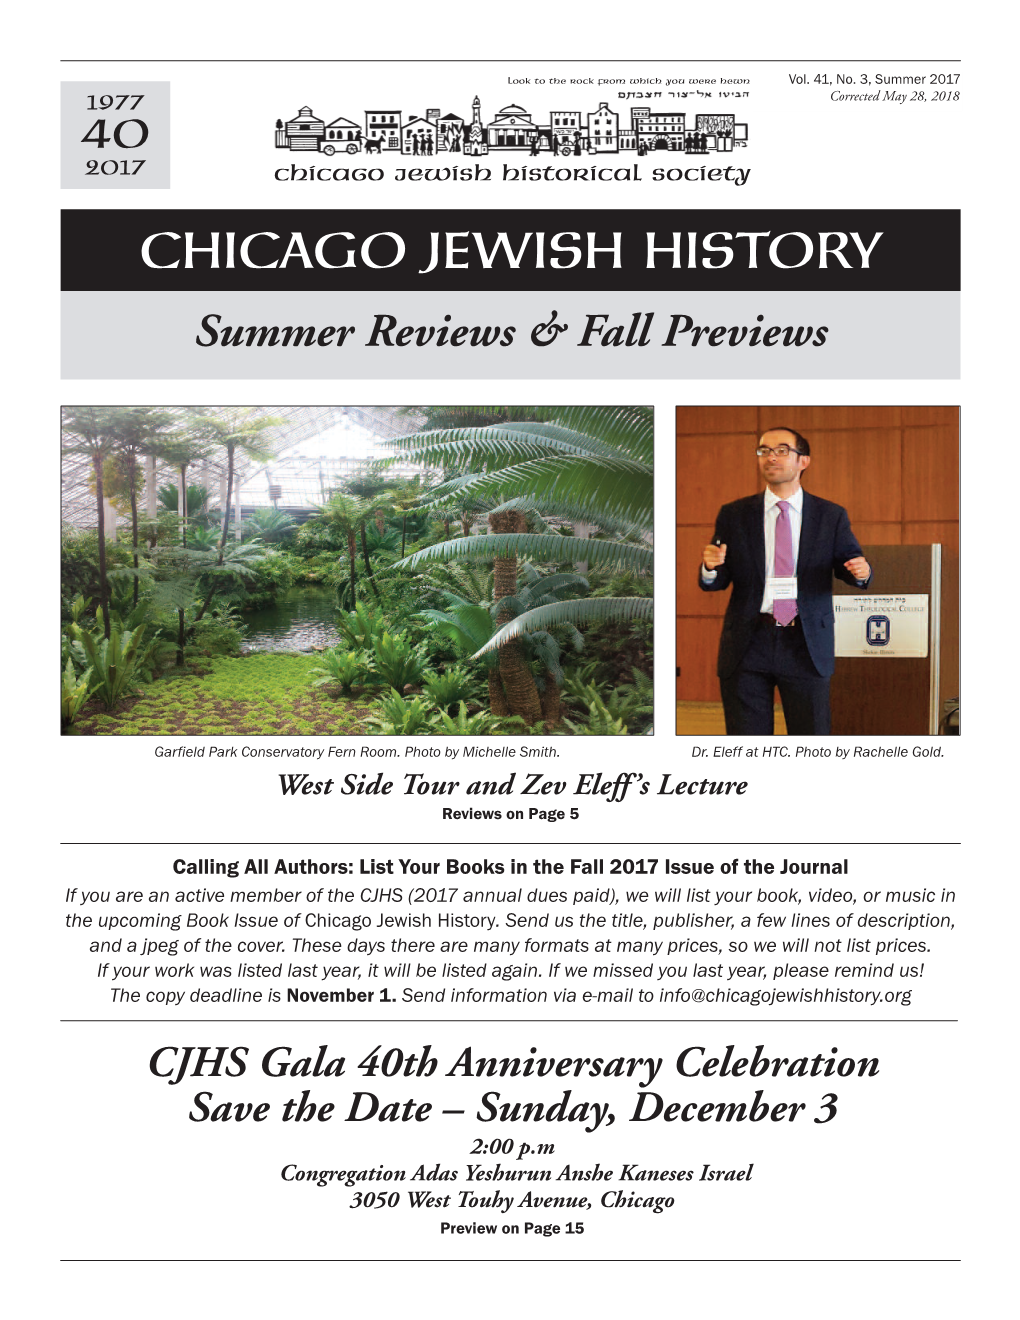 CHICAGO JEWISH HISTORY Summer Reviews & Fall Previews